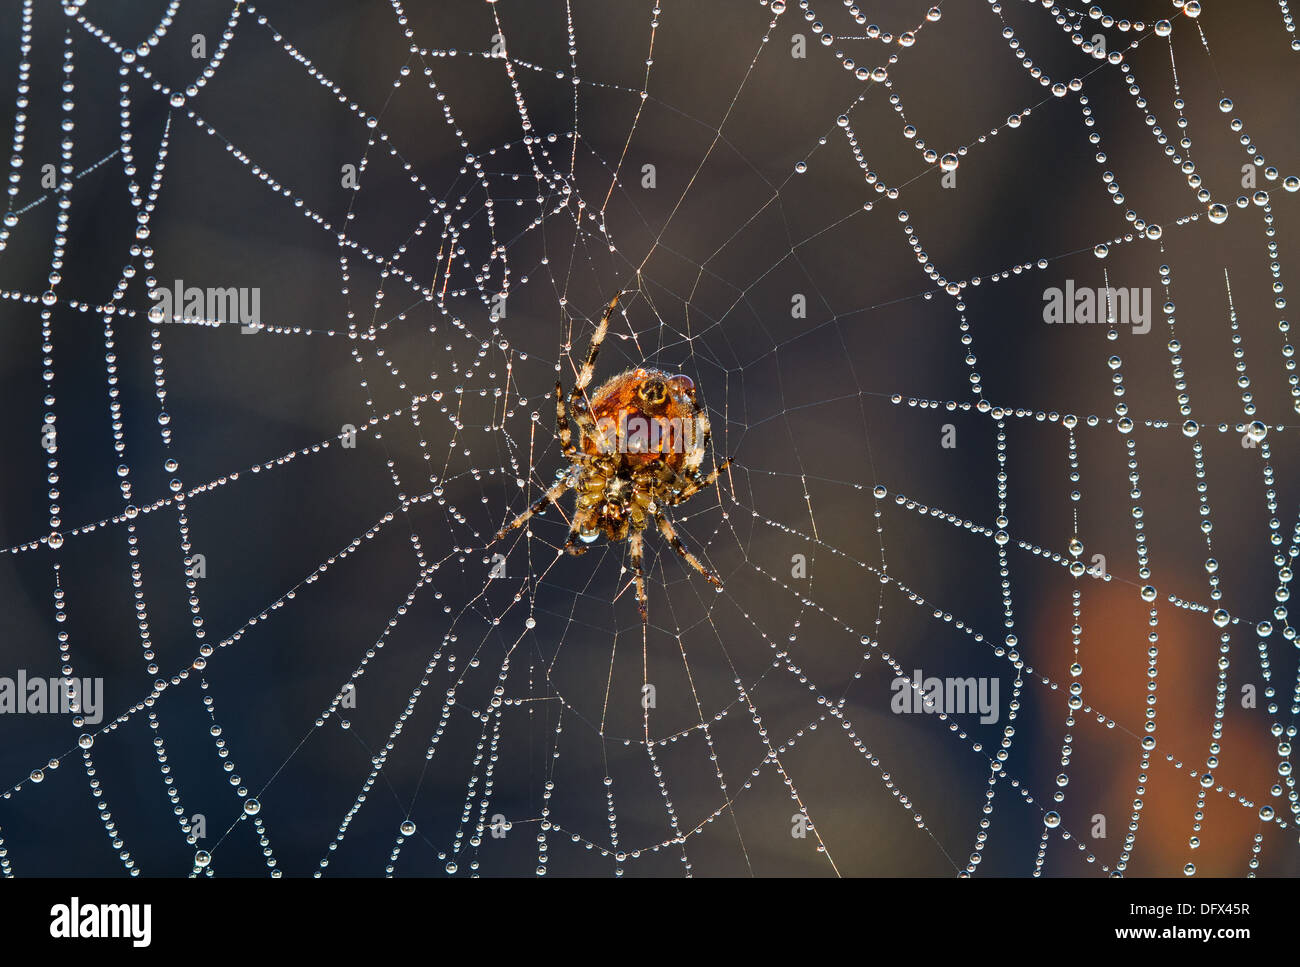 European garden spider, Araneus diadematus, in a spiderweb with dewdrops Stock Photo